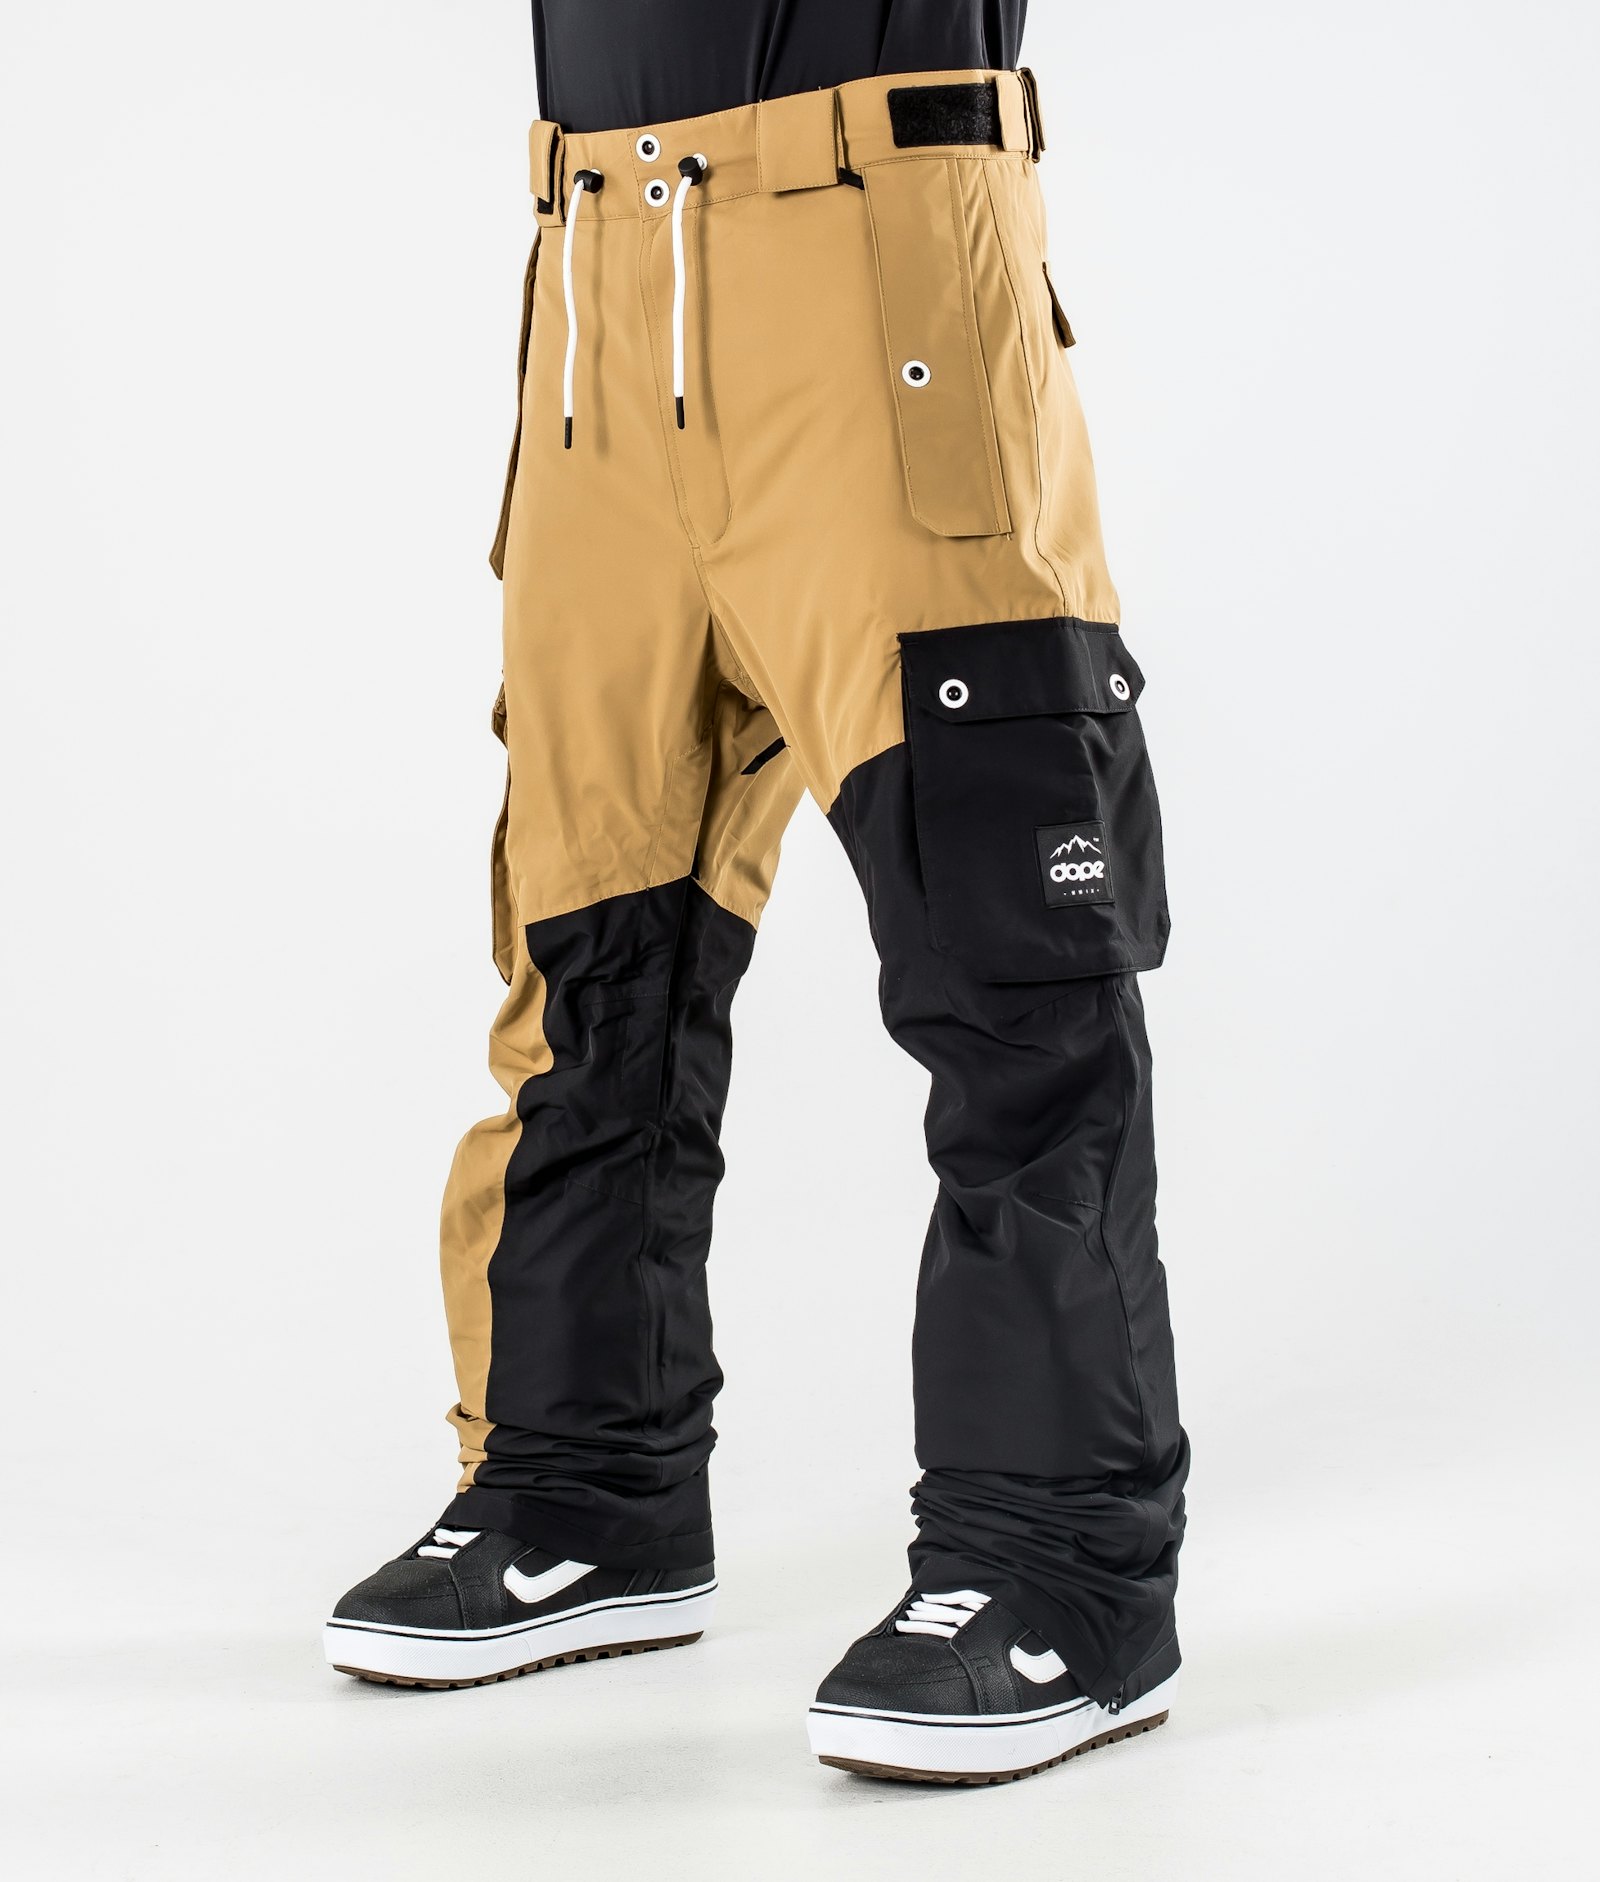 Adept 2020 Snowboardhose Herren Gold/Black